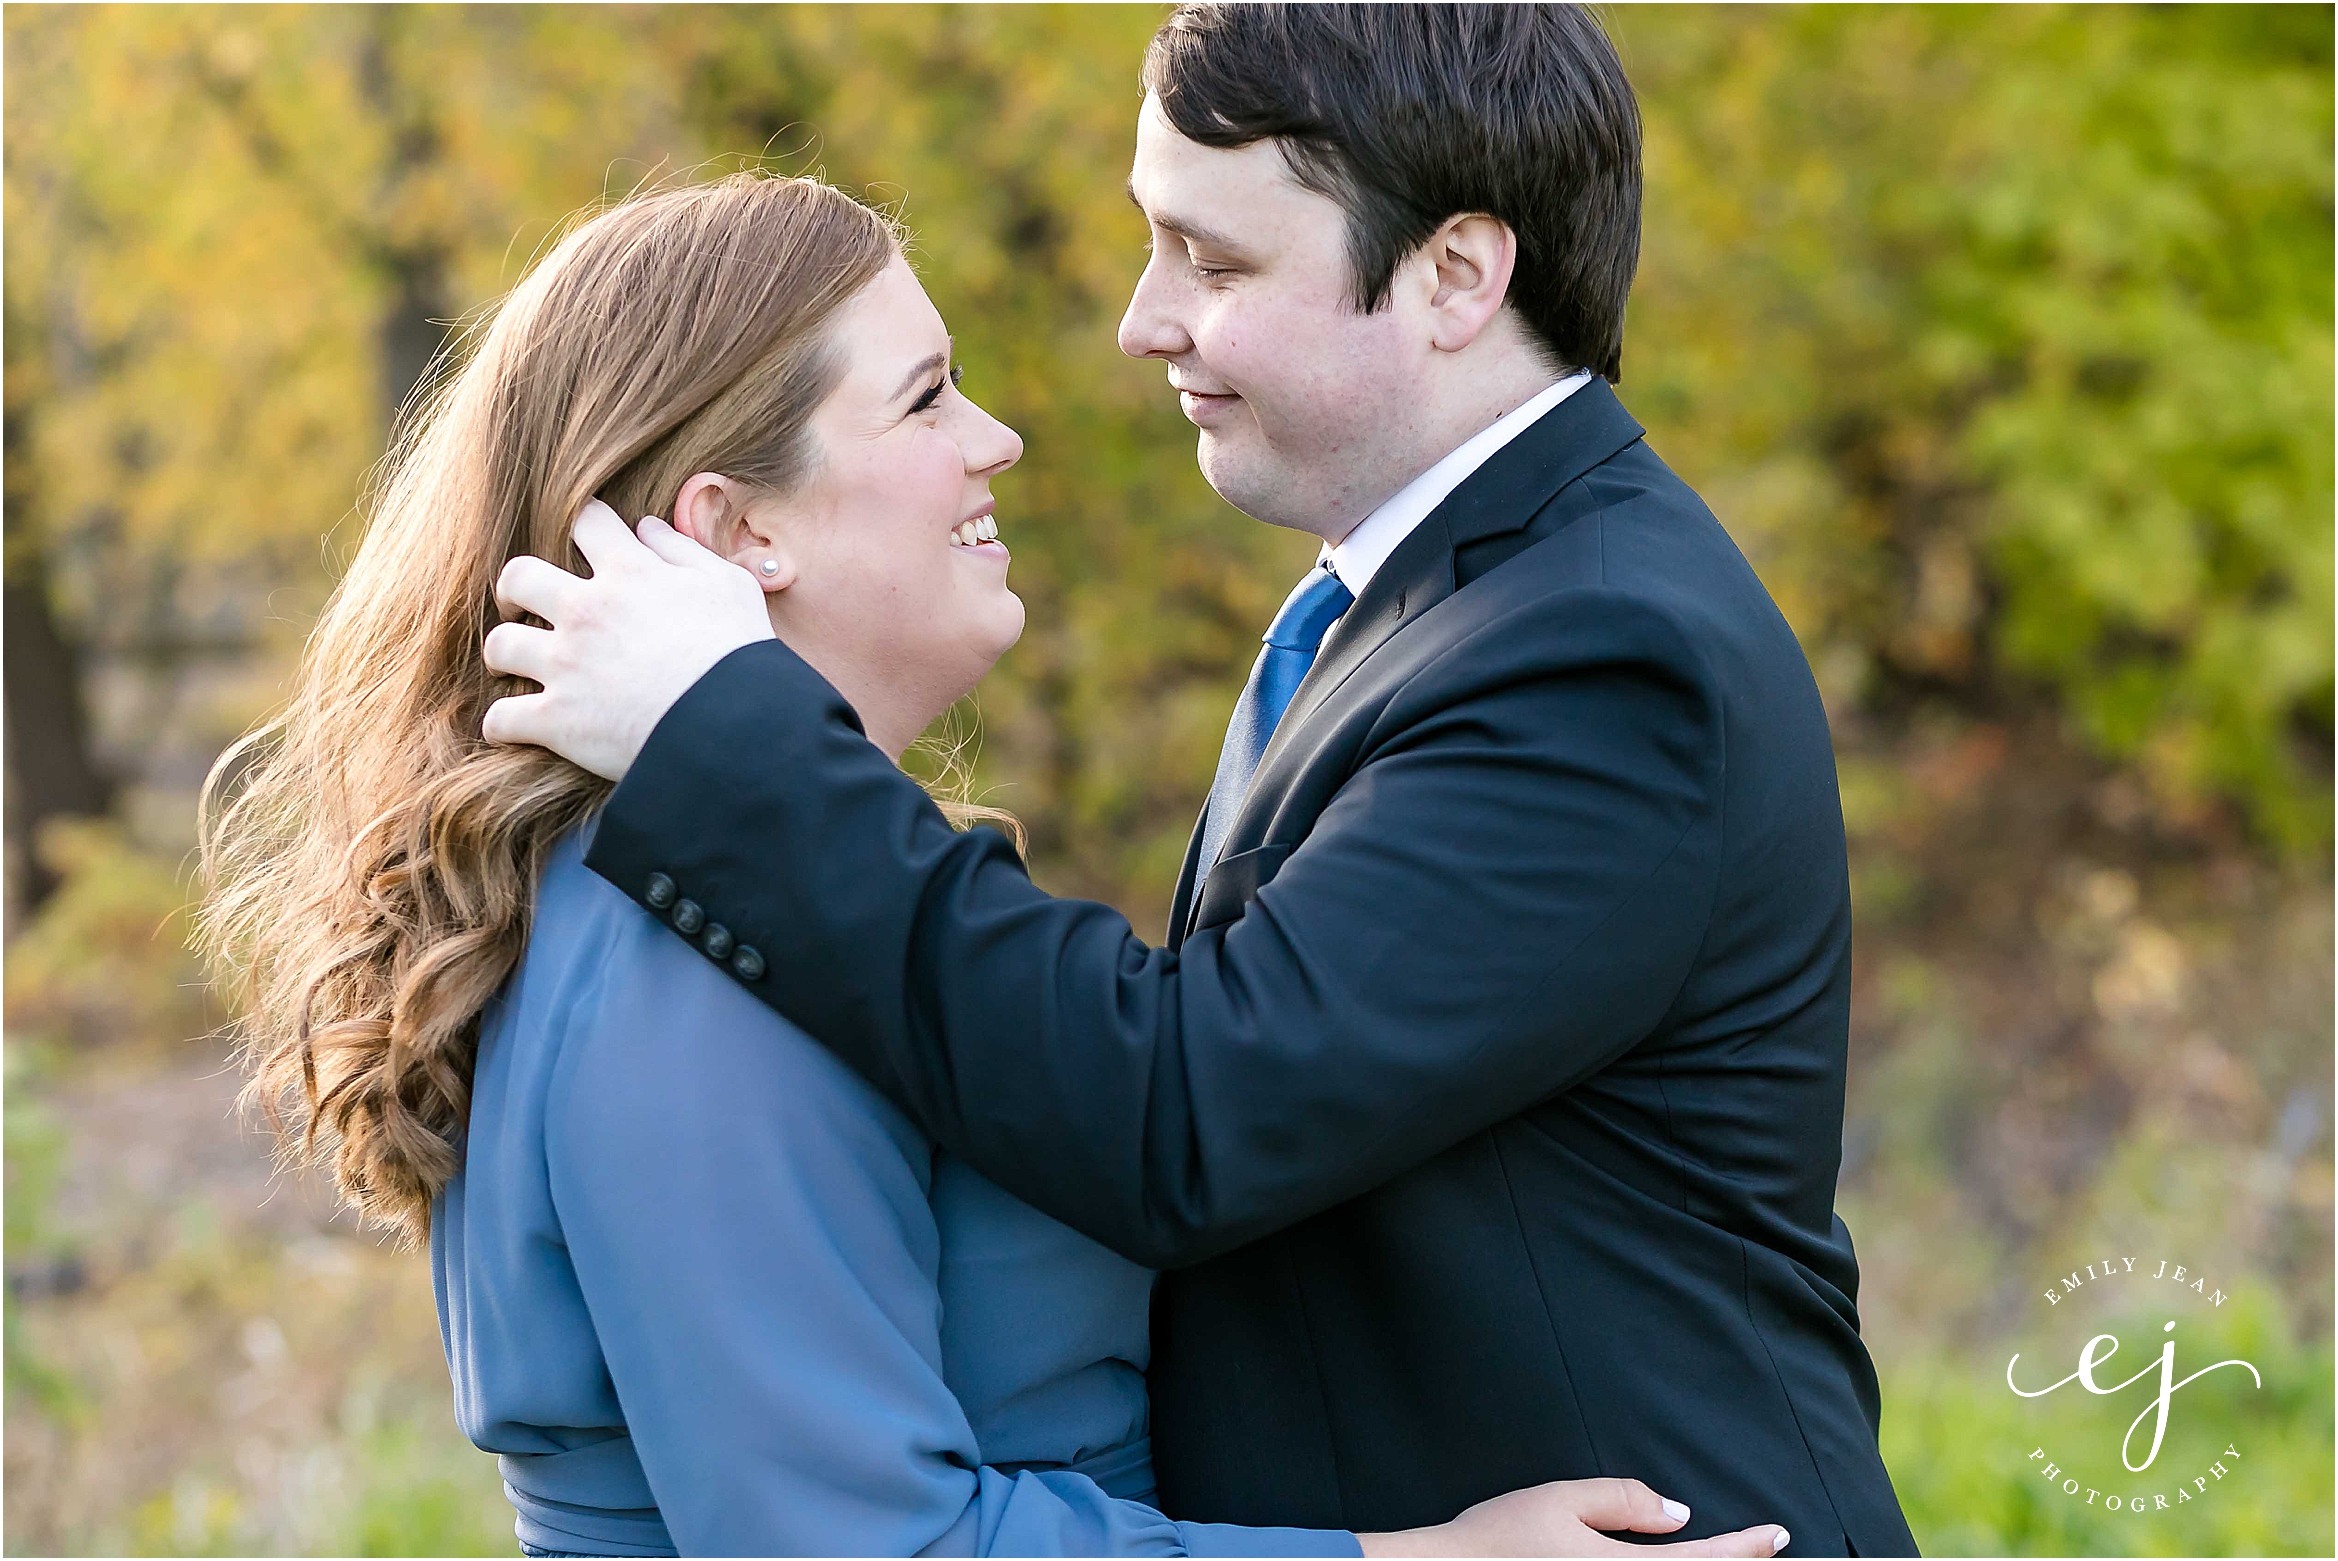 baltic born blue dress engagement photo groom tucking bride's hair back